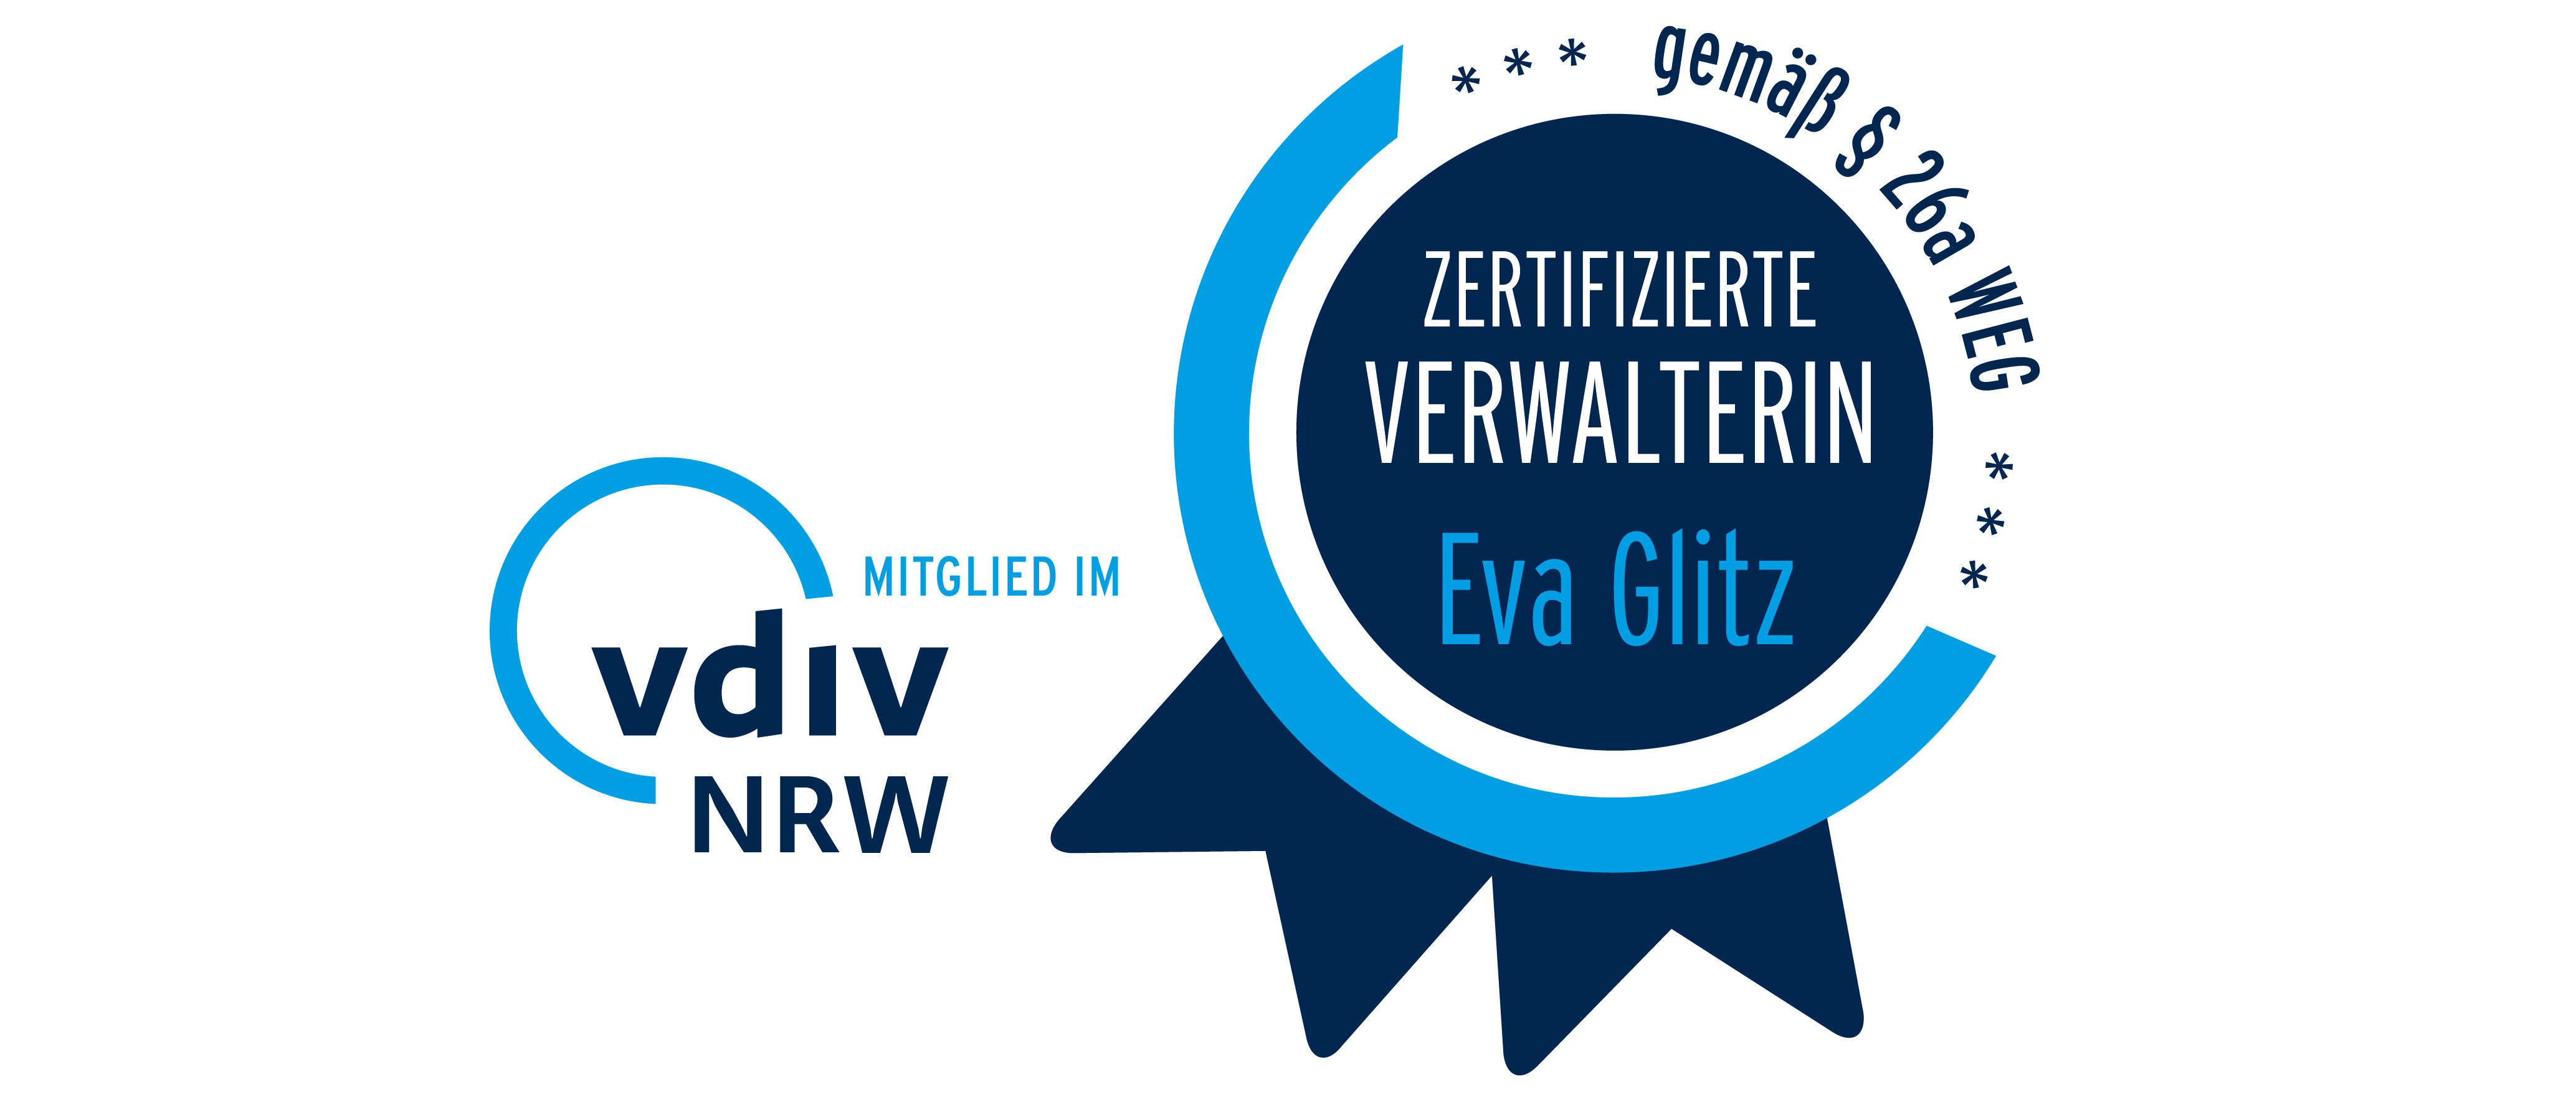 VDIV - zertifizierte Verwalterin Eva Glitz